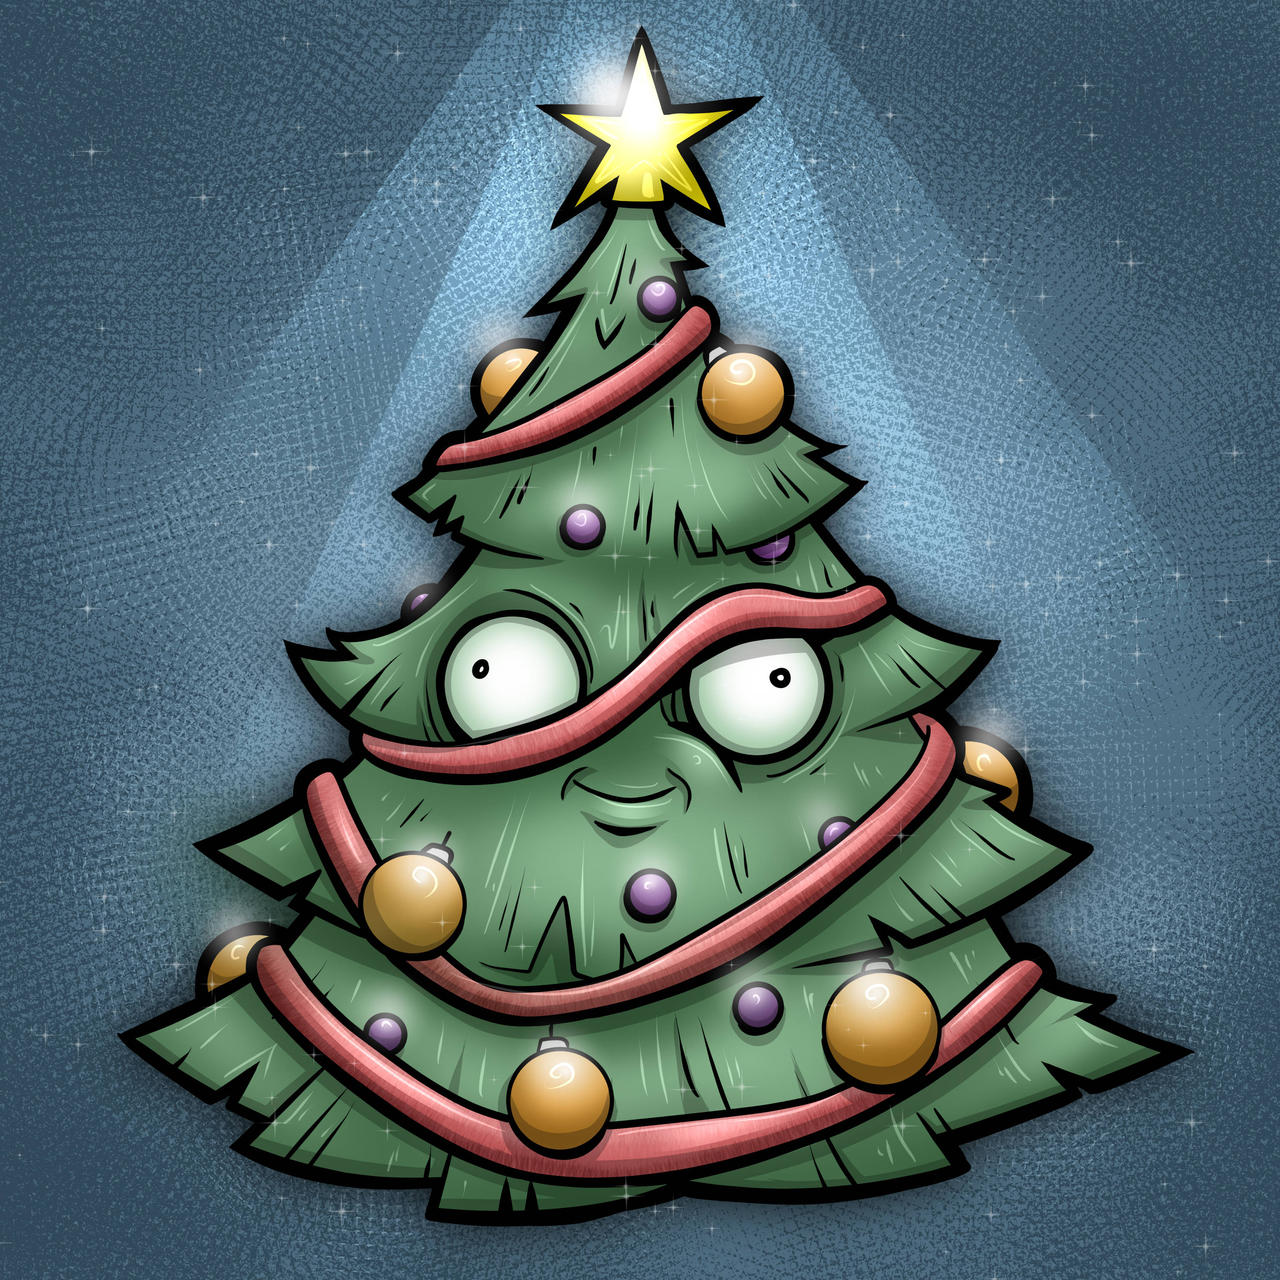 Googly Eyes Christmas Tree Illustration by AaronCillustrations on DeviantArt